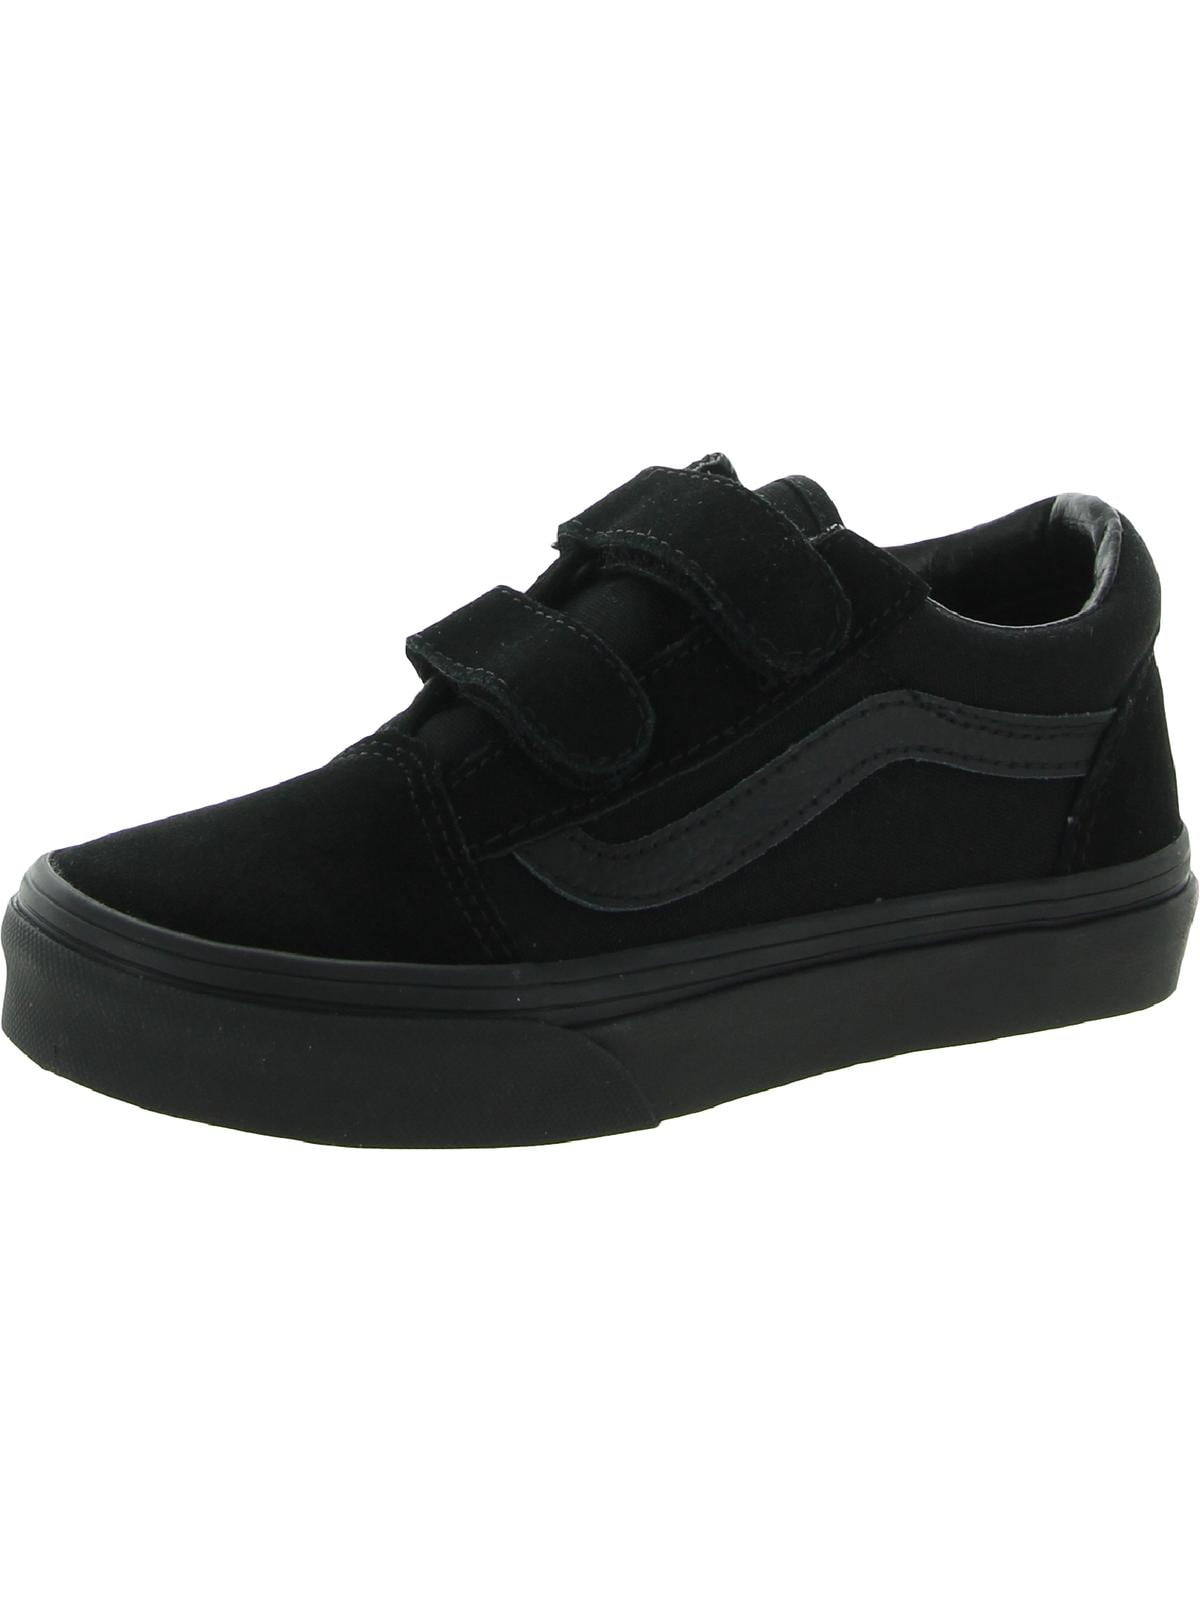 Vans Girls Old Skool V Leather Skate Shoes Black 1 Medium (B,M) Little Kid